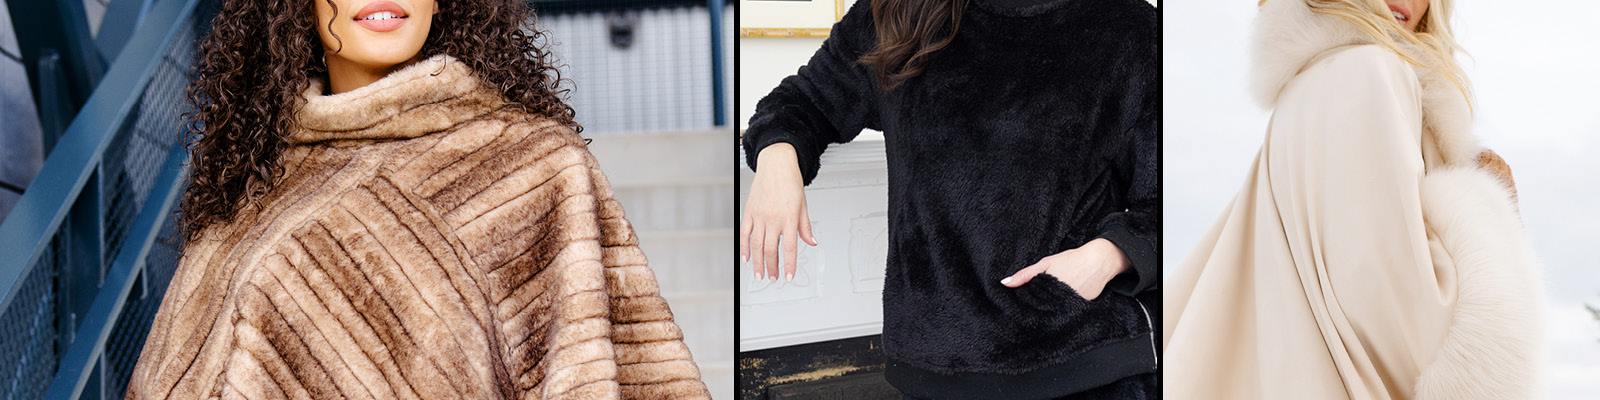 J Mendel Mink Sweater  Fur sweater, Fur dress, Fabulous furs